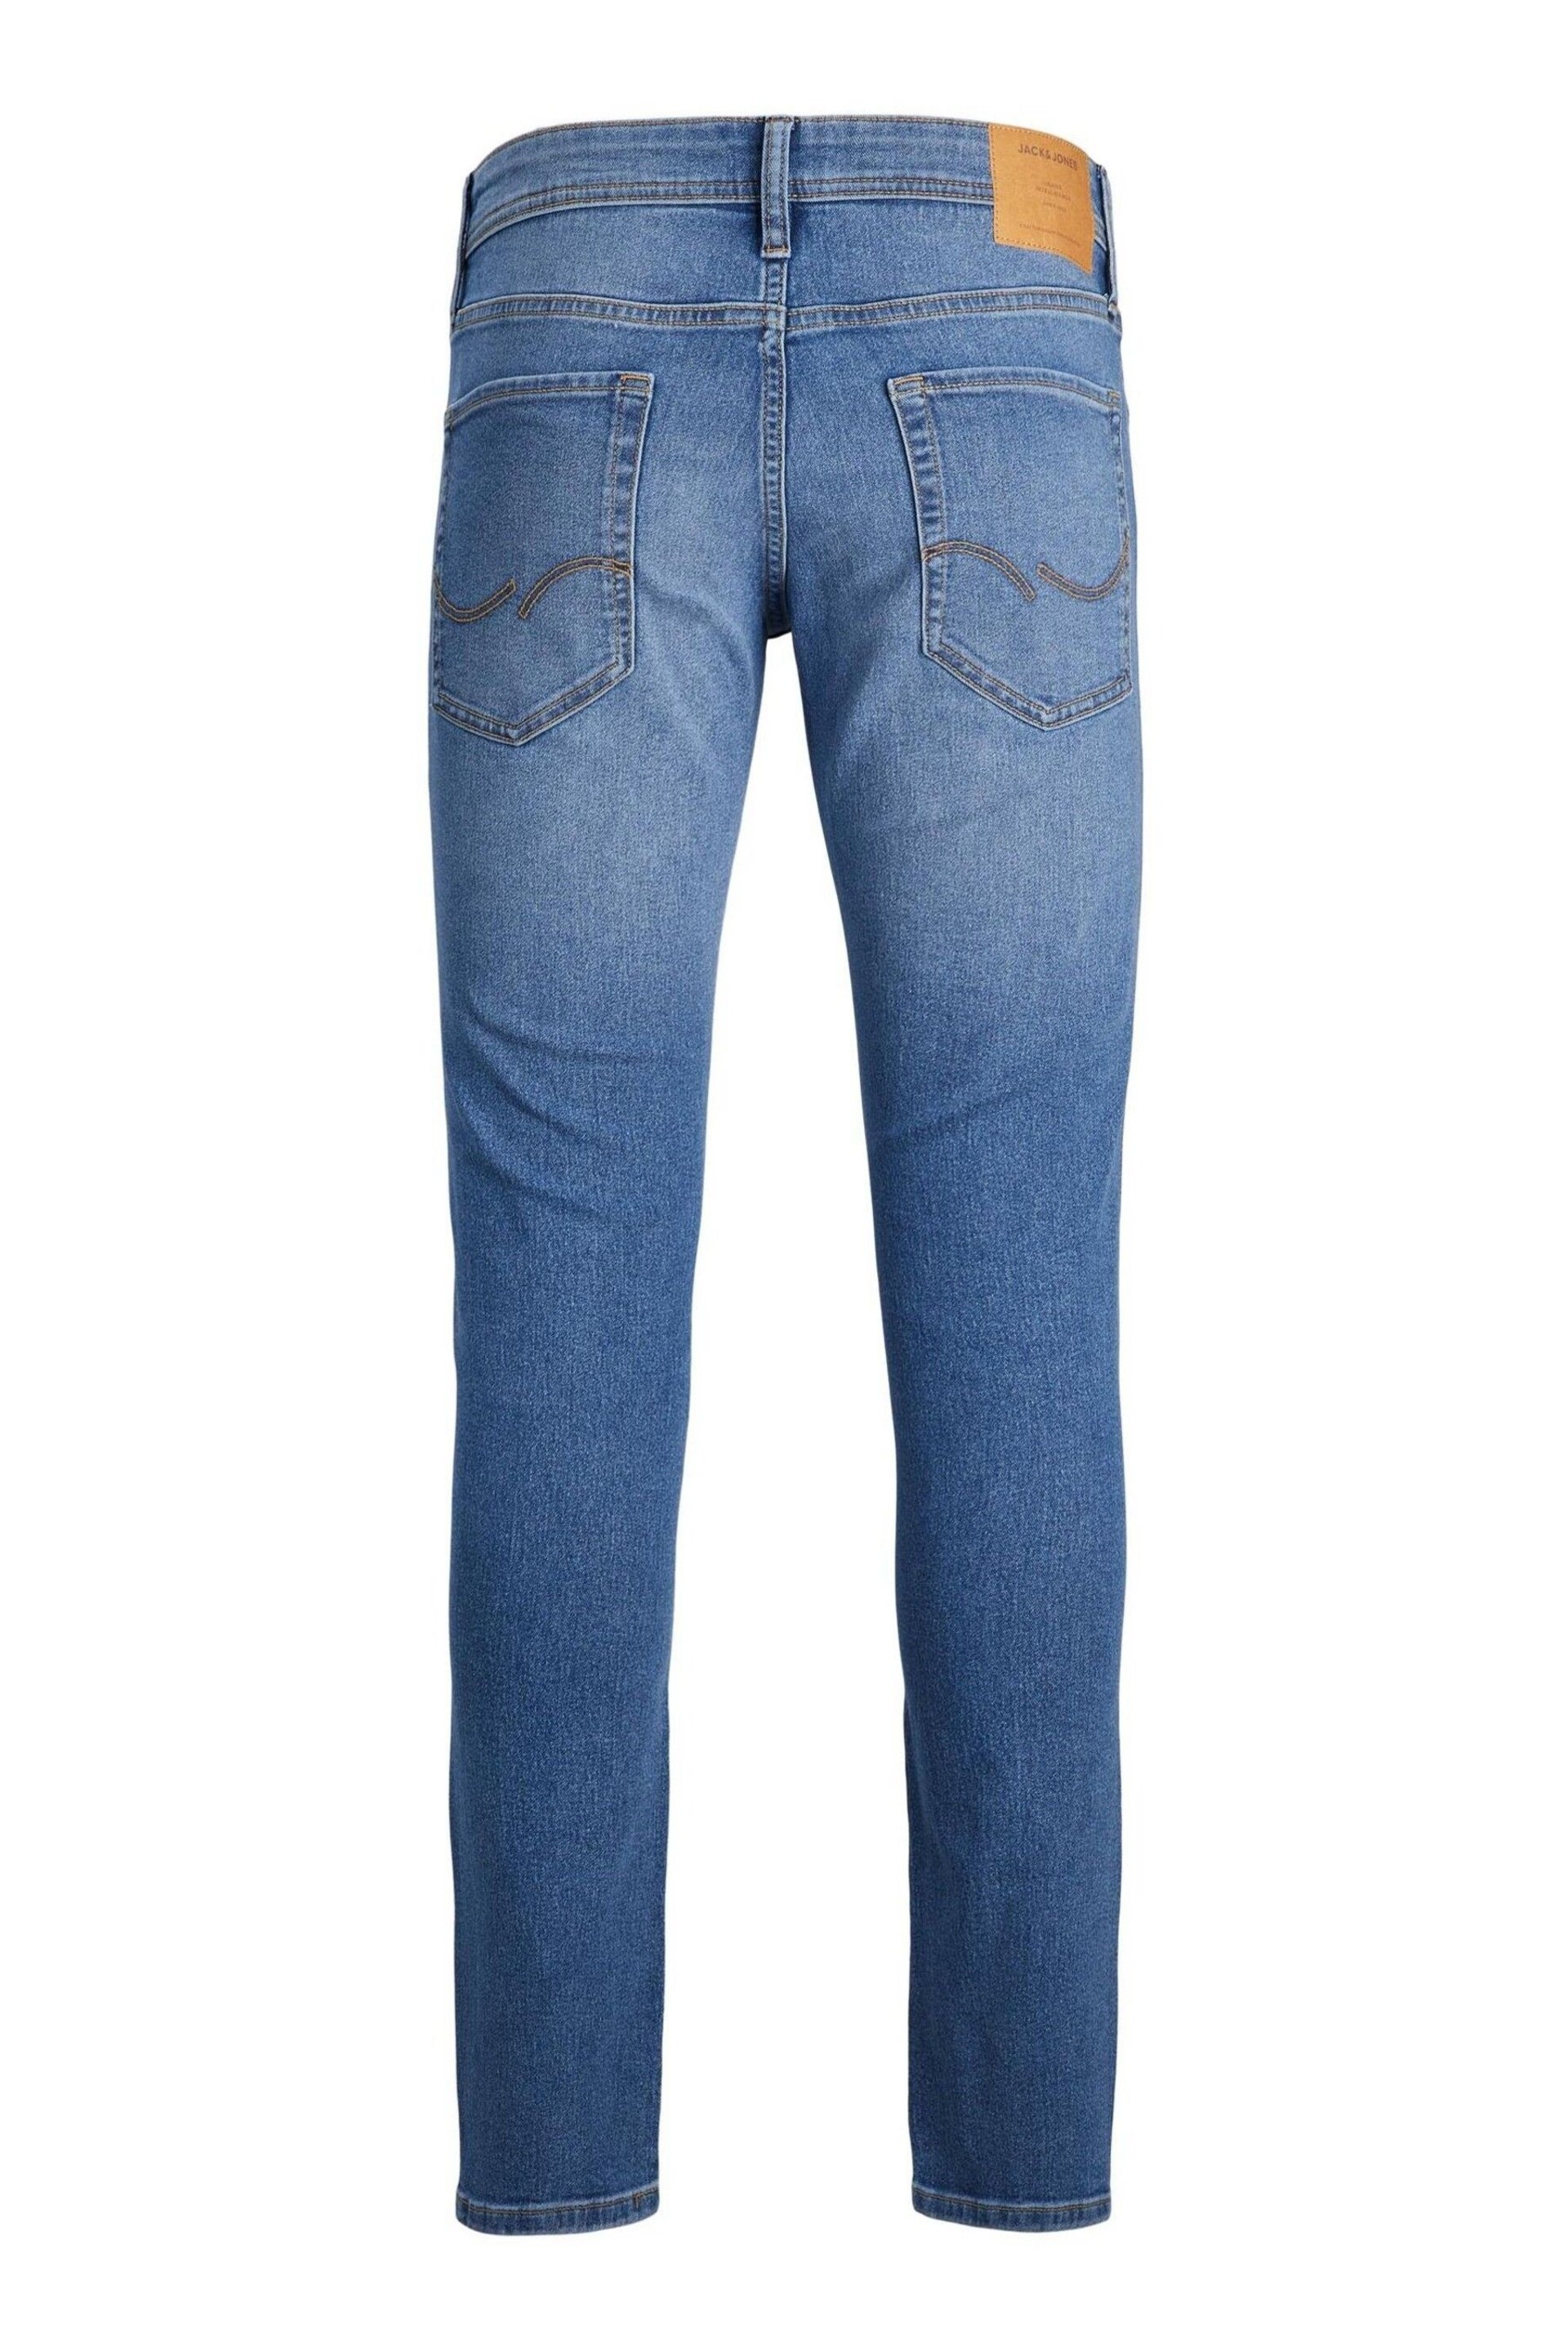 JACK & JONES Blue Slim Fit Jeans - Image 6 of 8